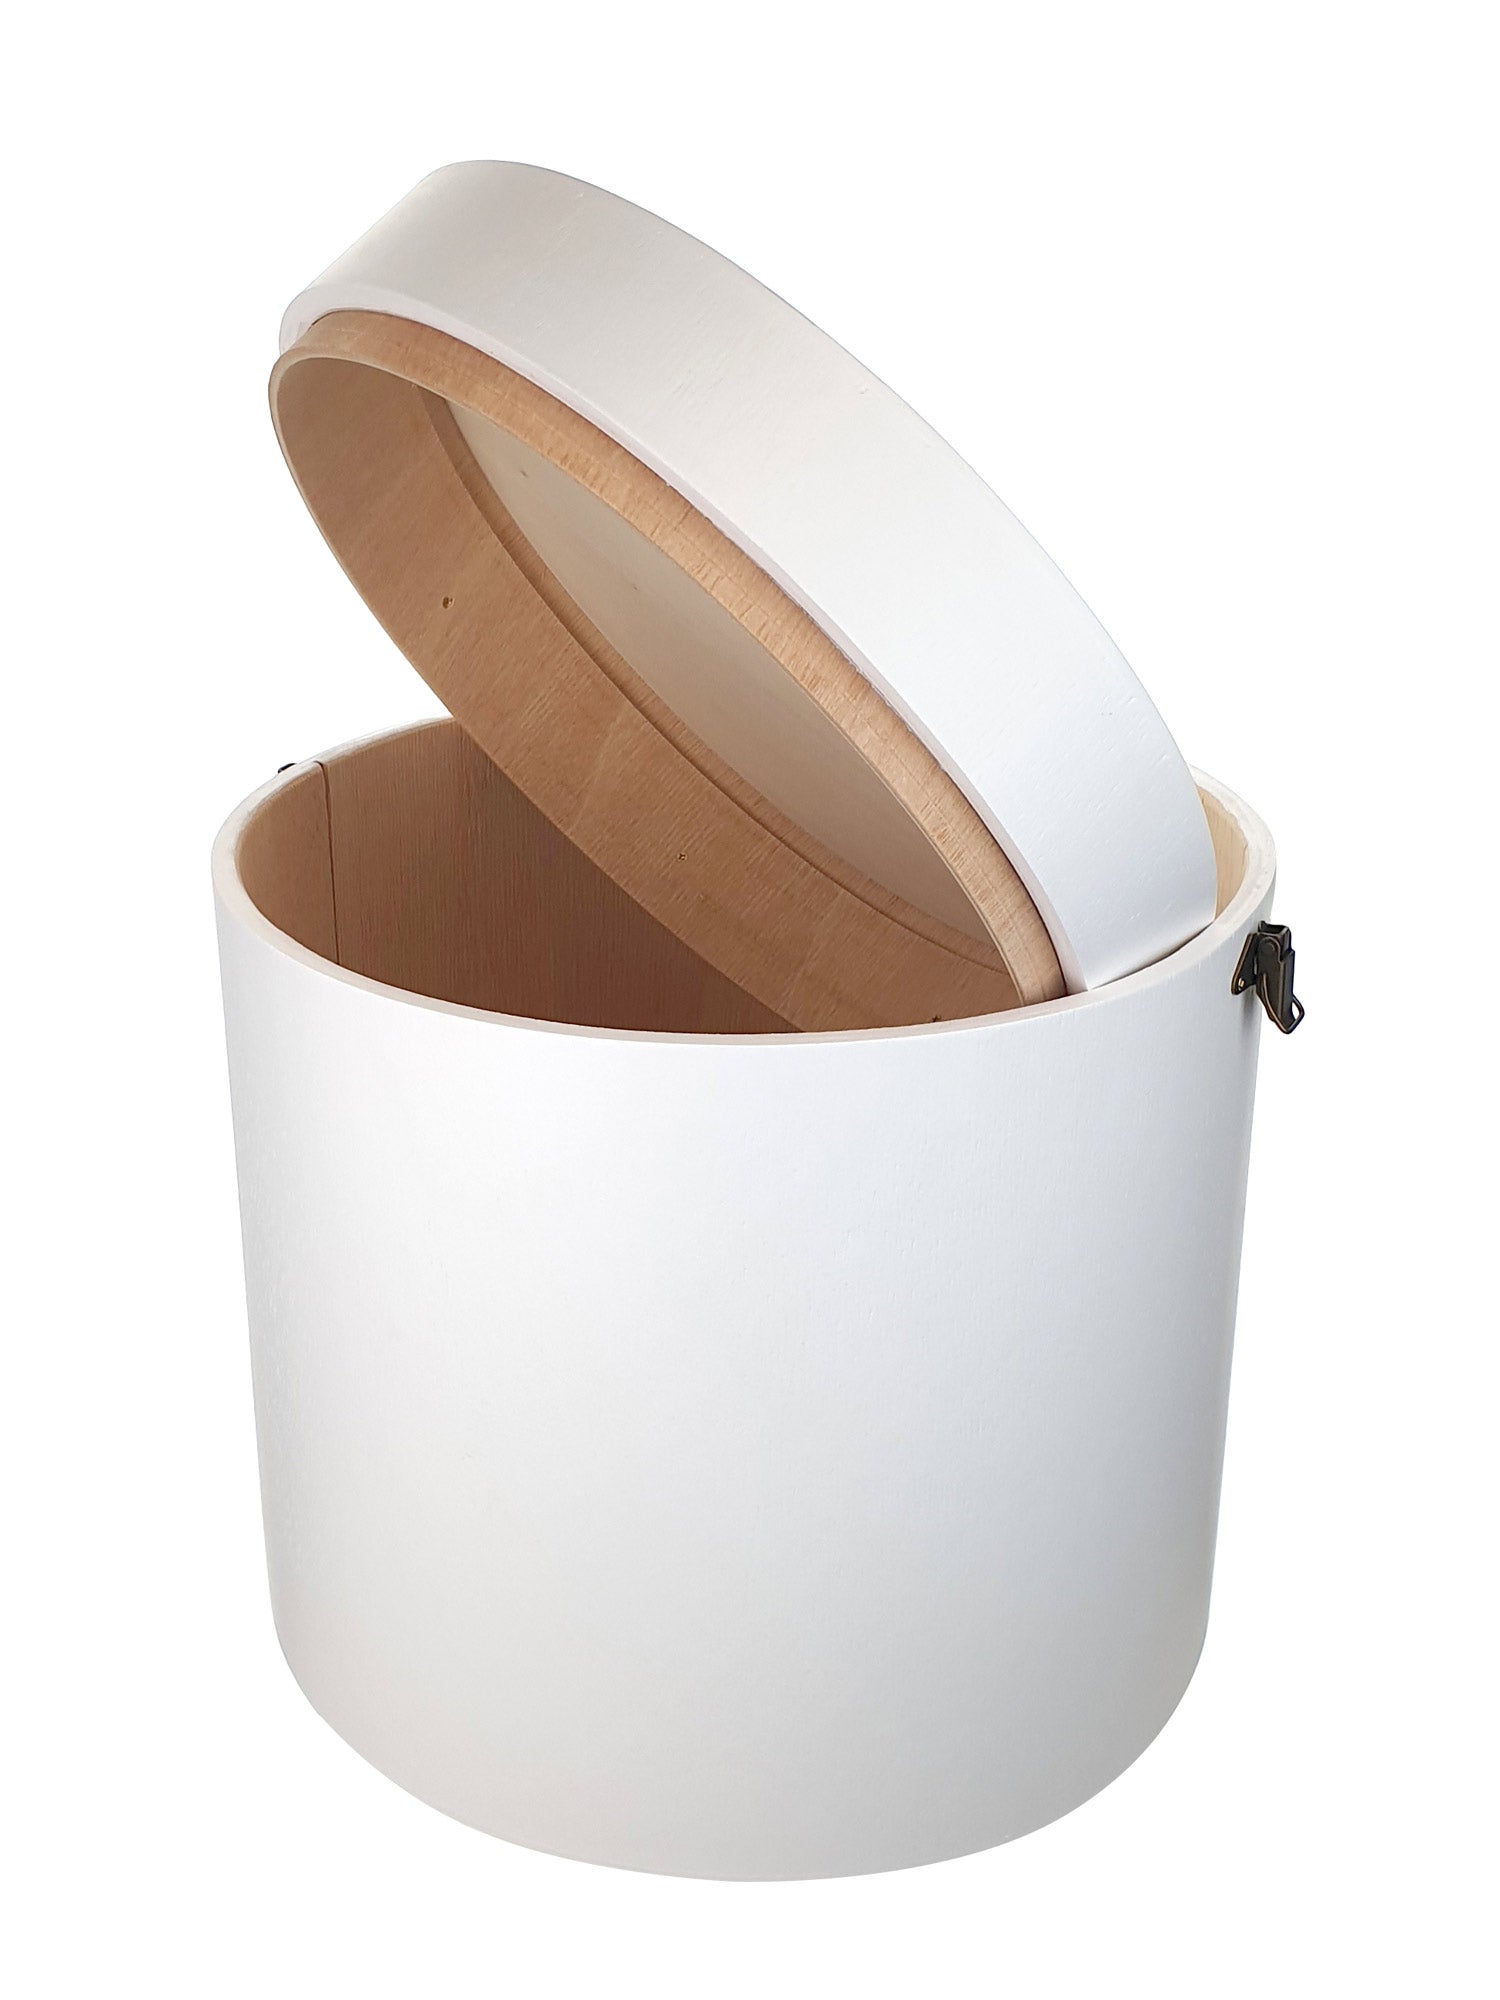 Round wooden baptismal box - WOODEN HAT BOX